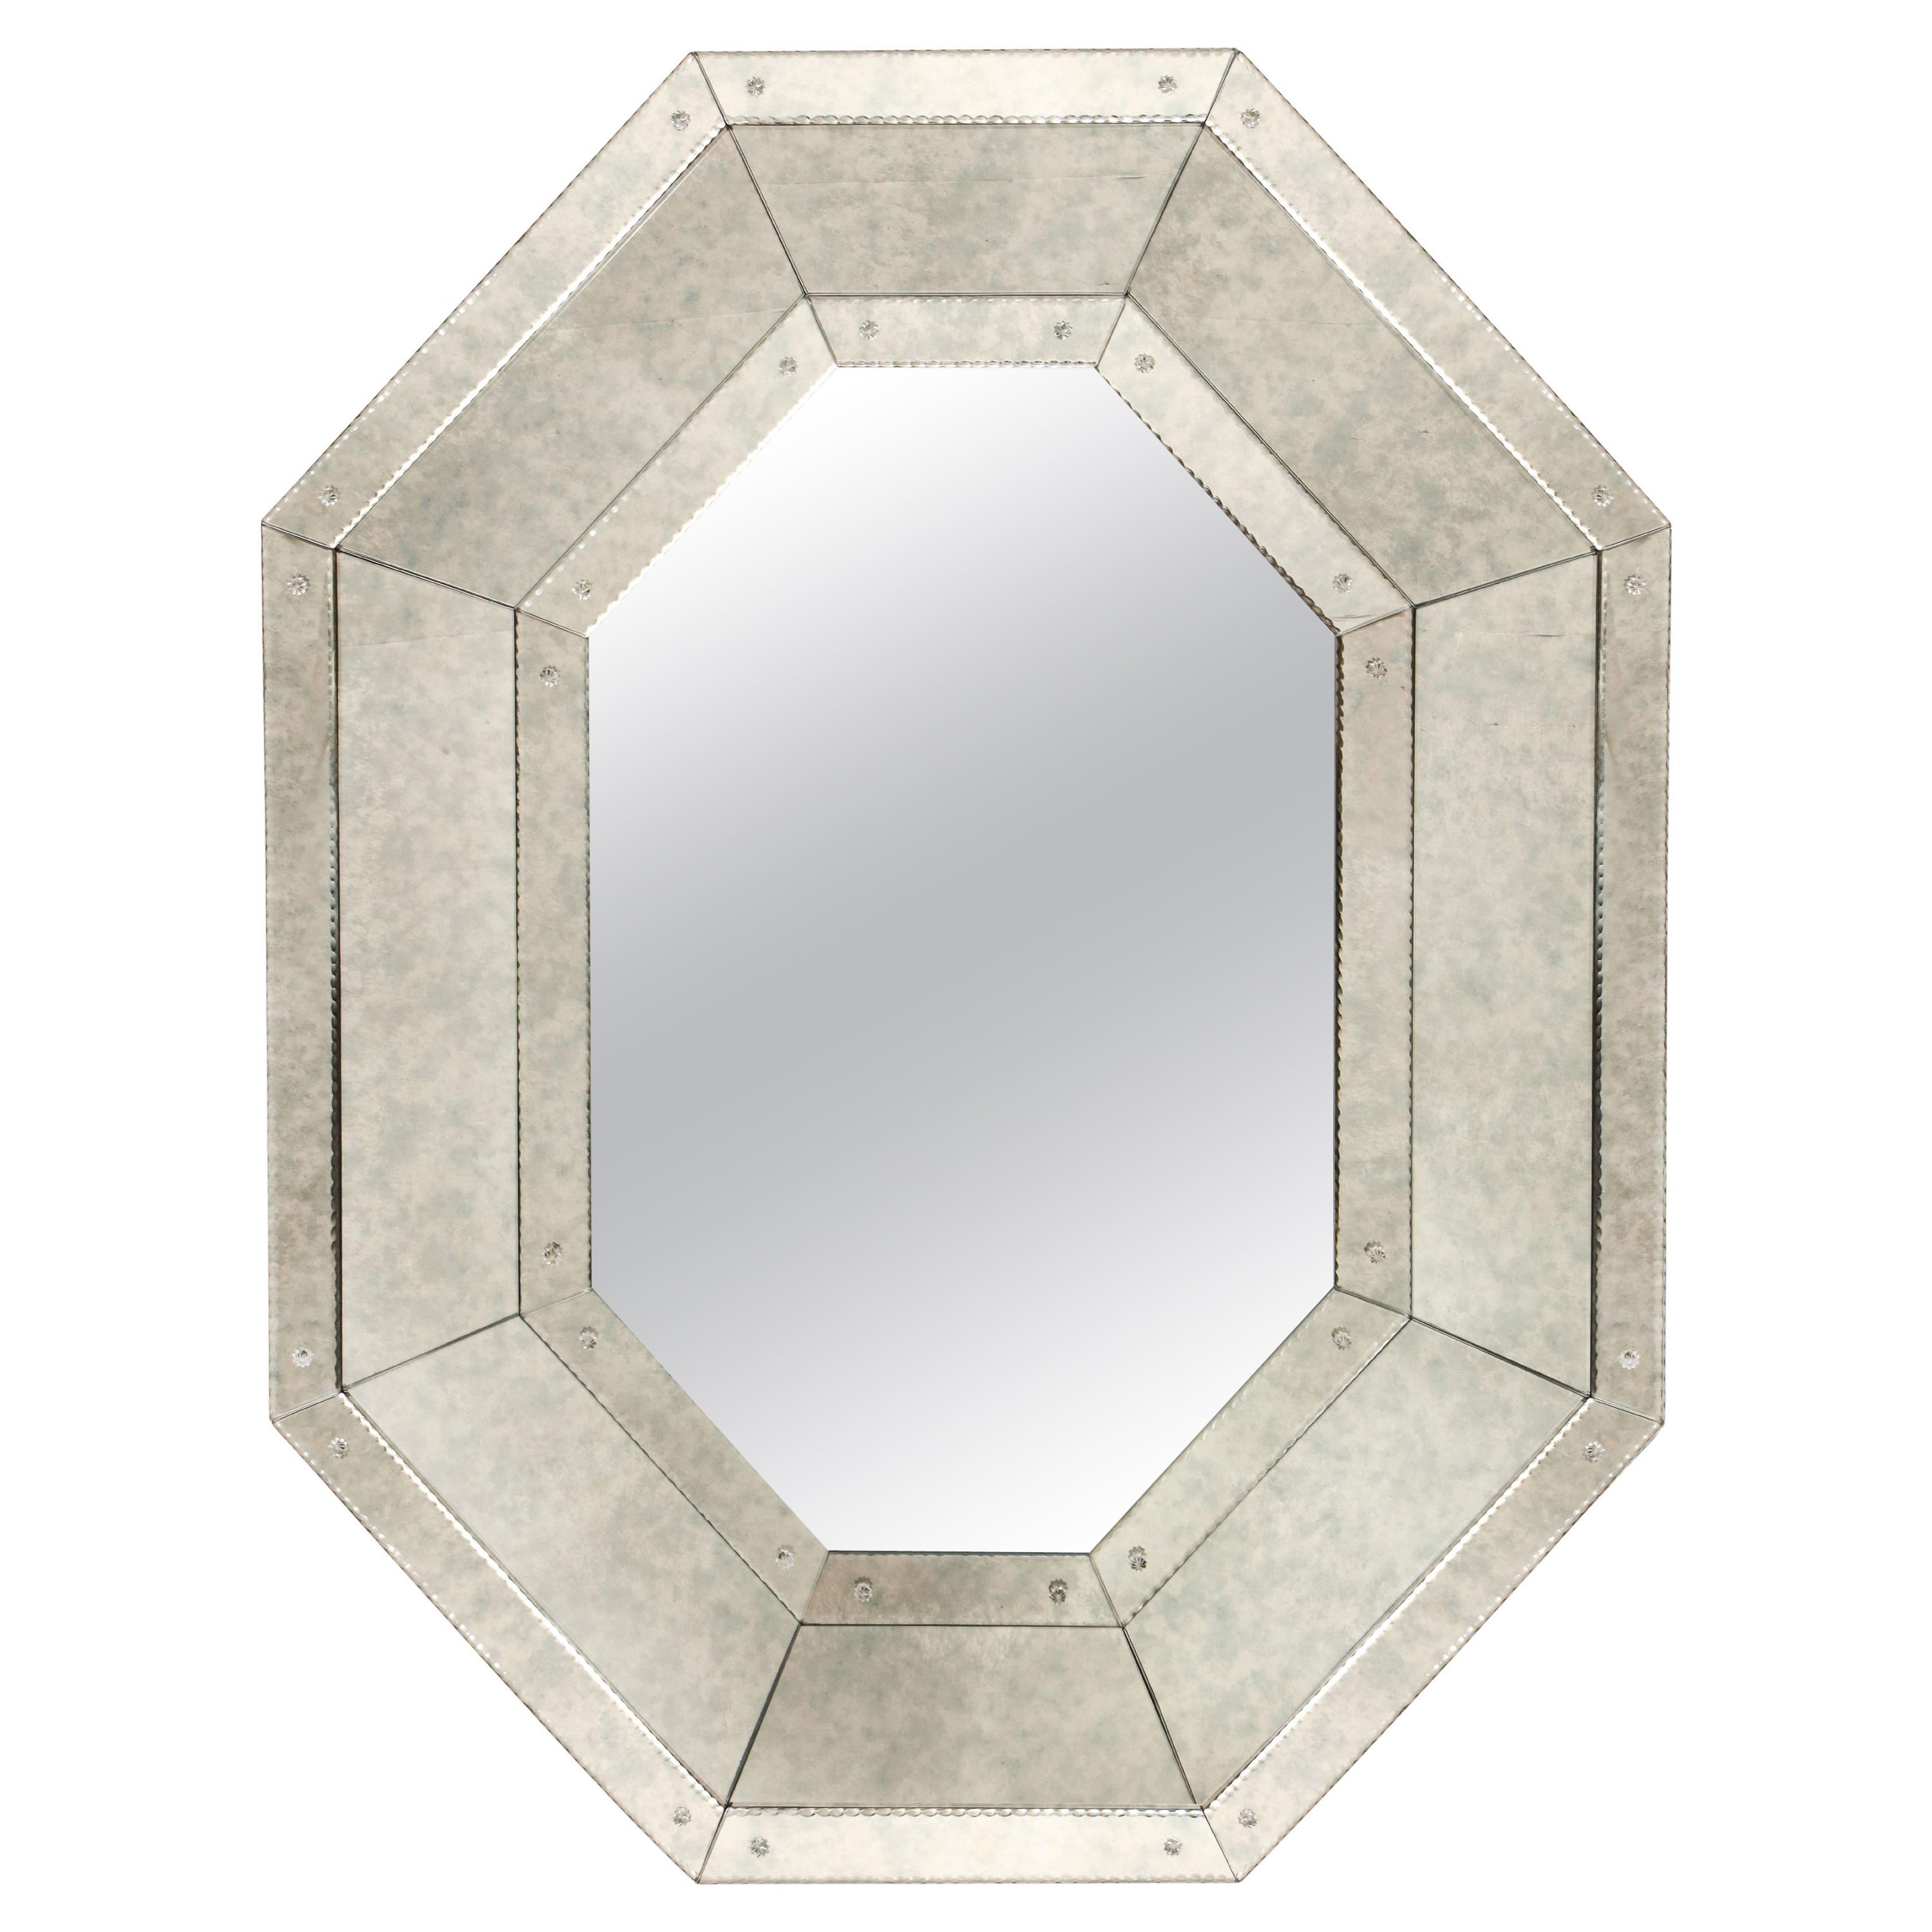 Individuell angefertigter antiker achteckiger Spiegel mit Pie-Cross-Rückkanten und Glasrosetten